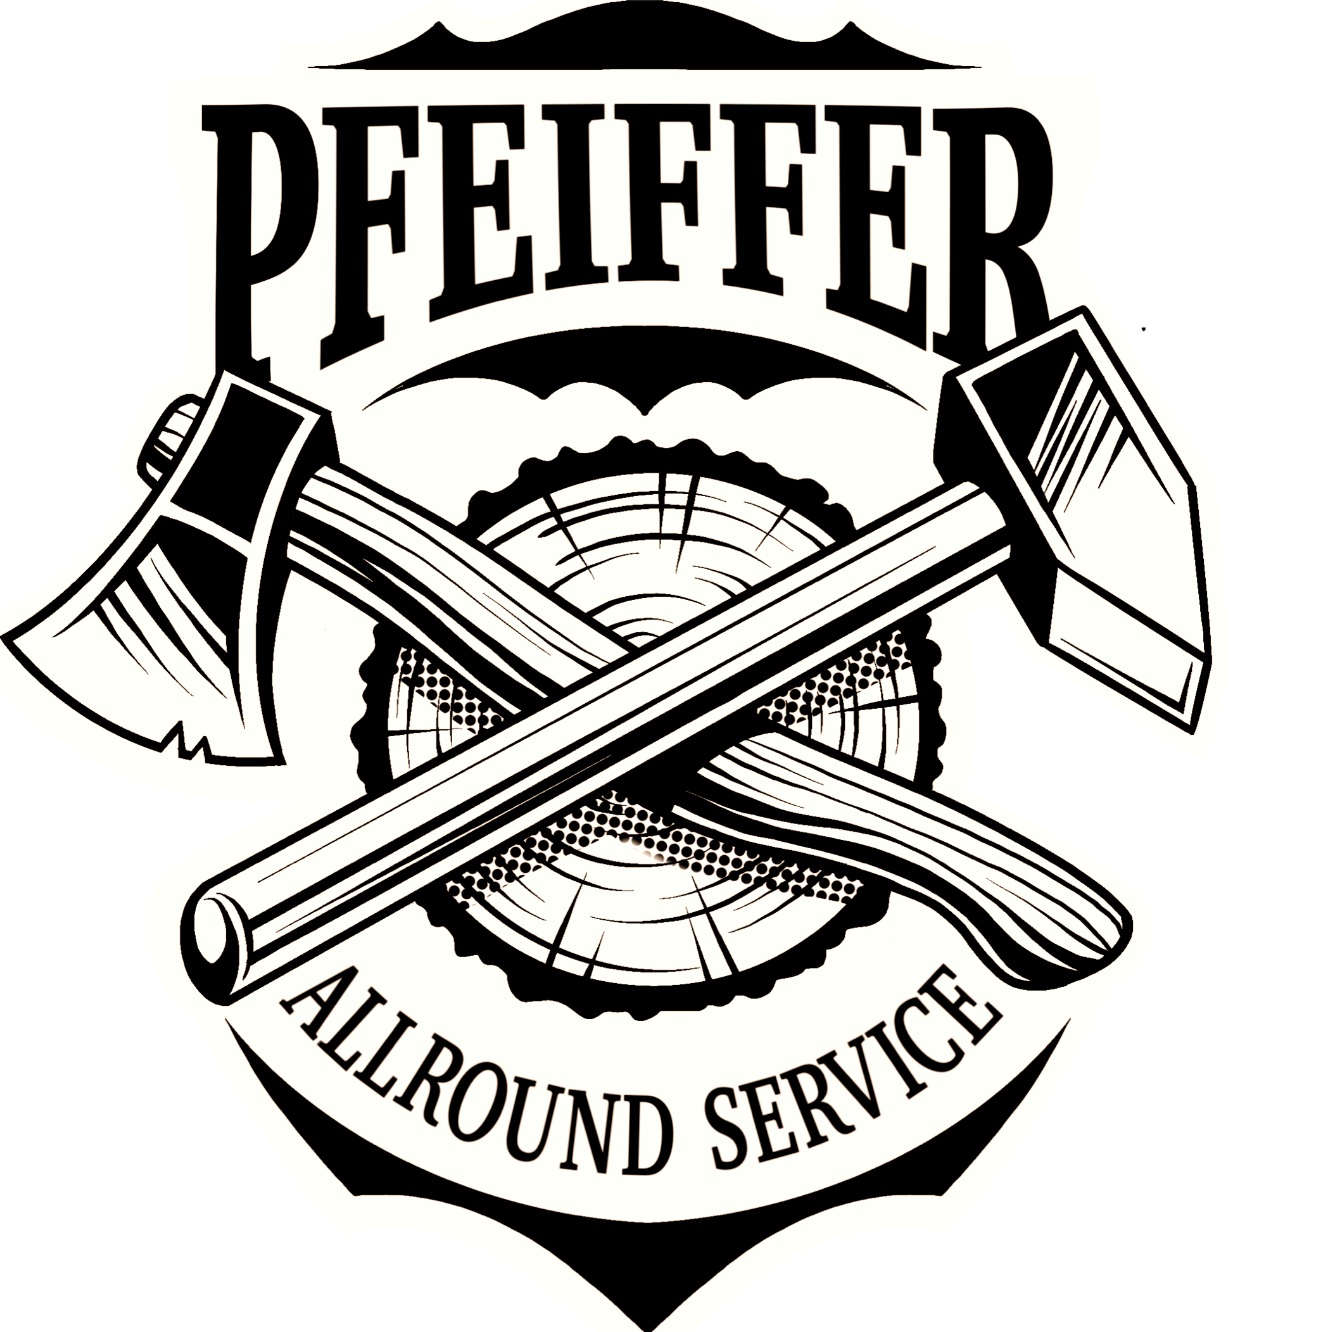 Pfeiffer Allround Service in Berlin - Logo